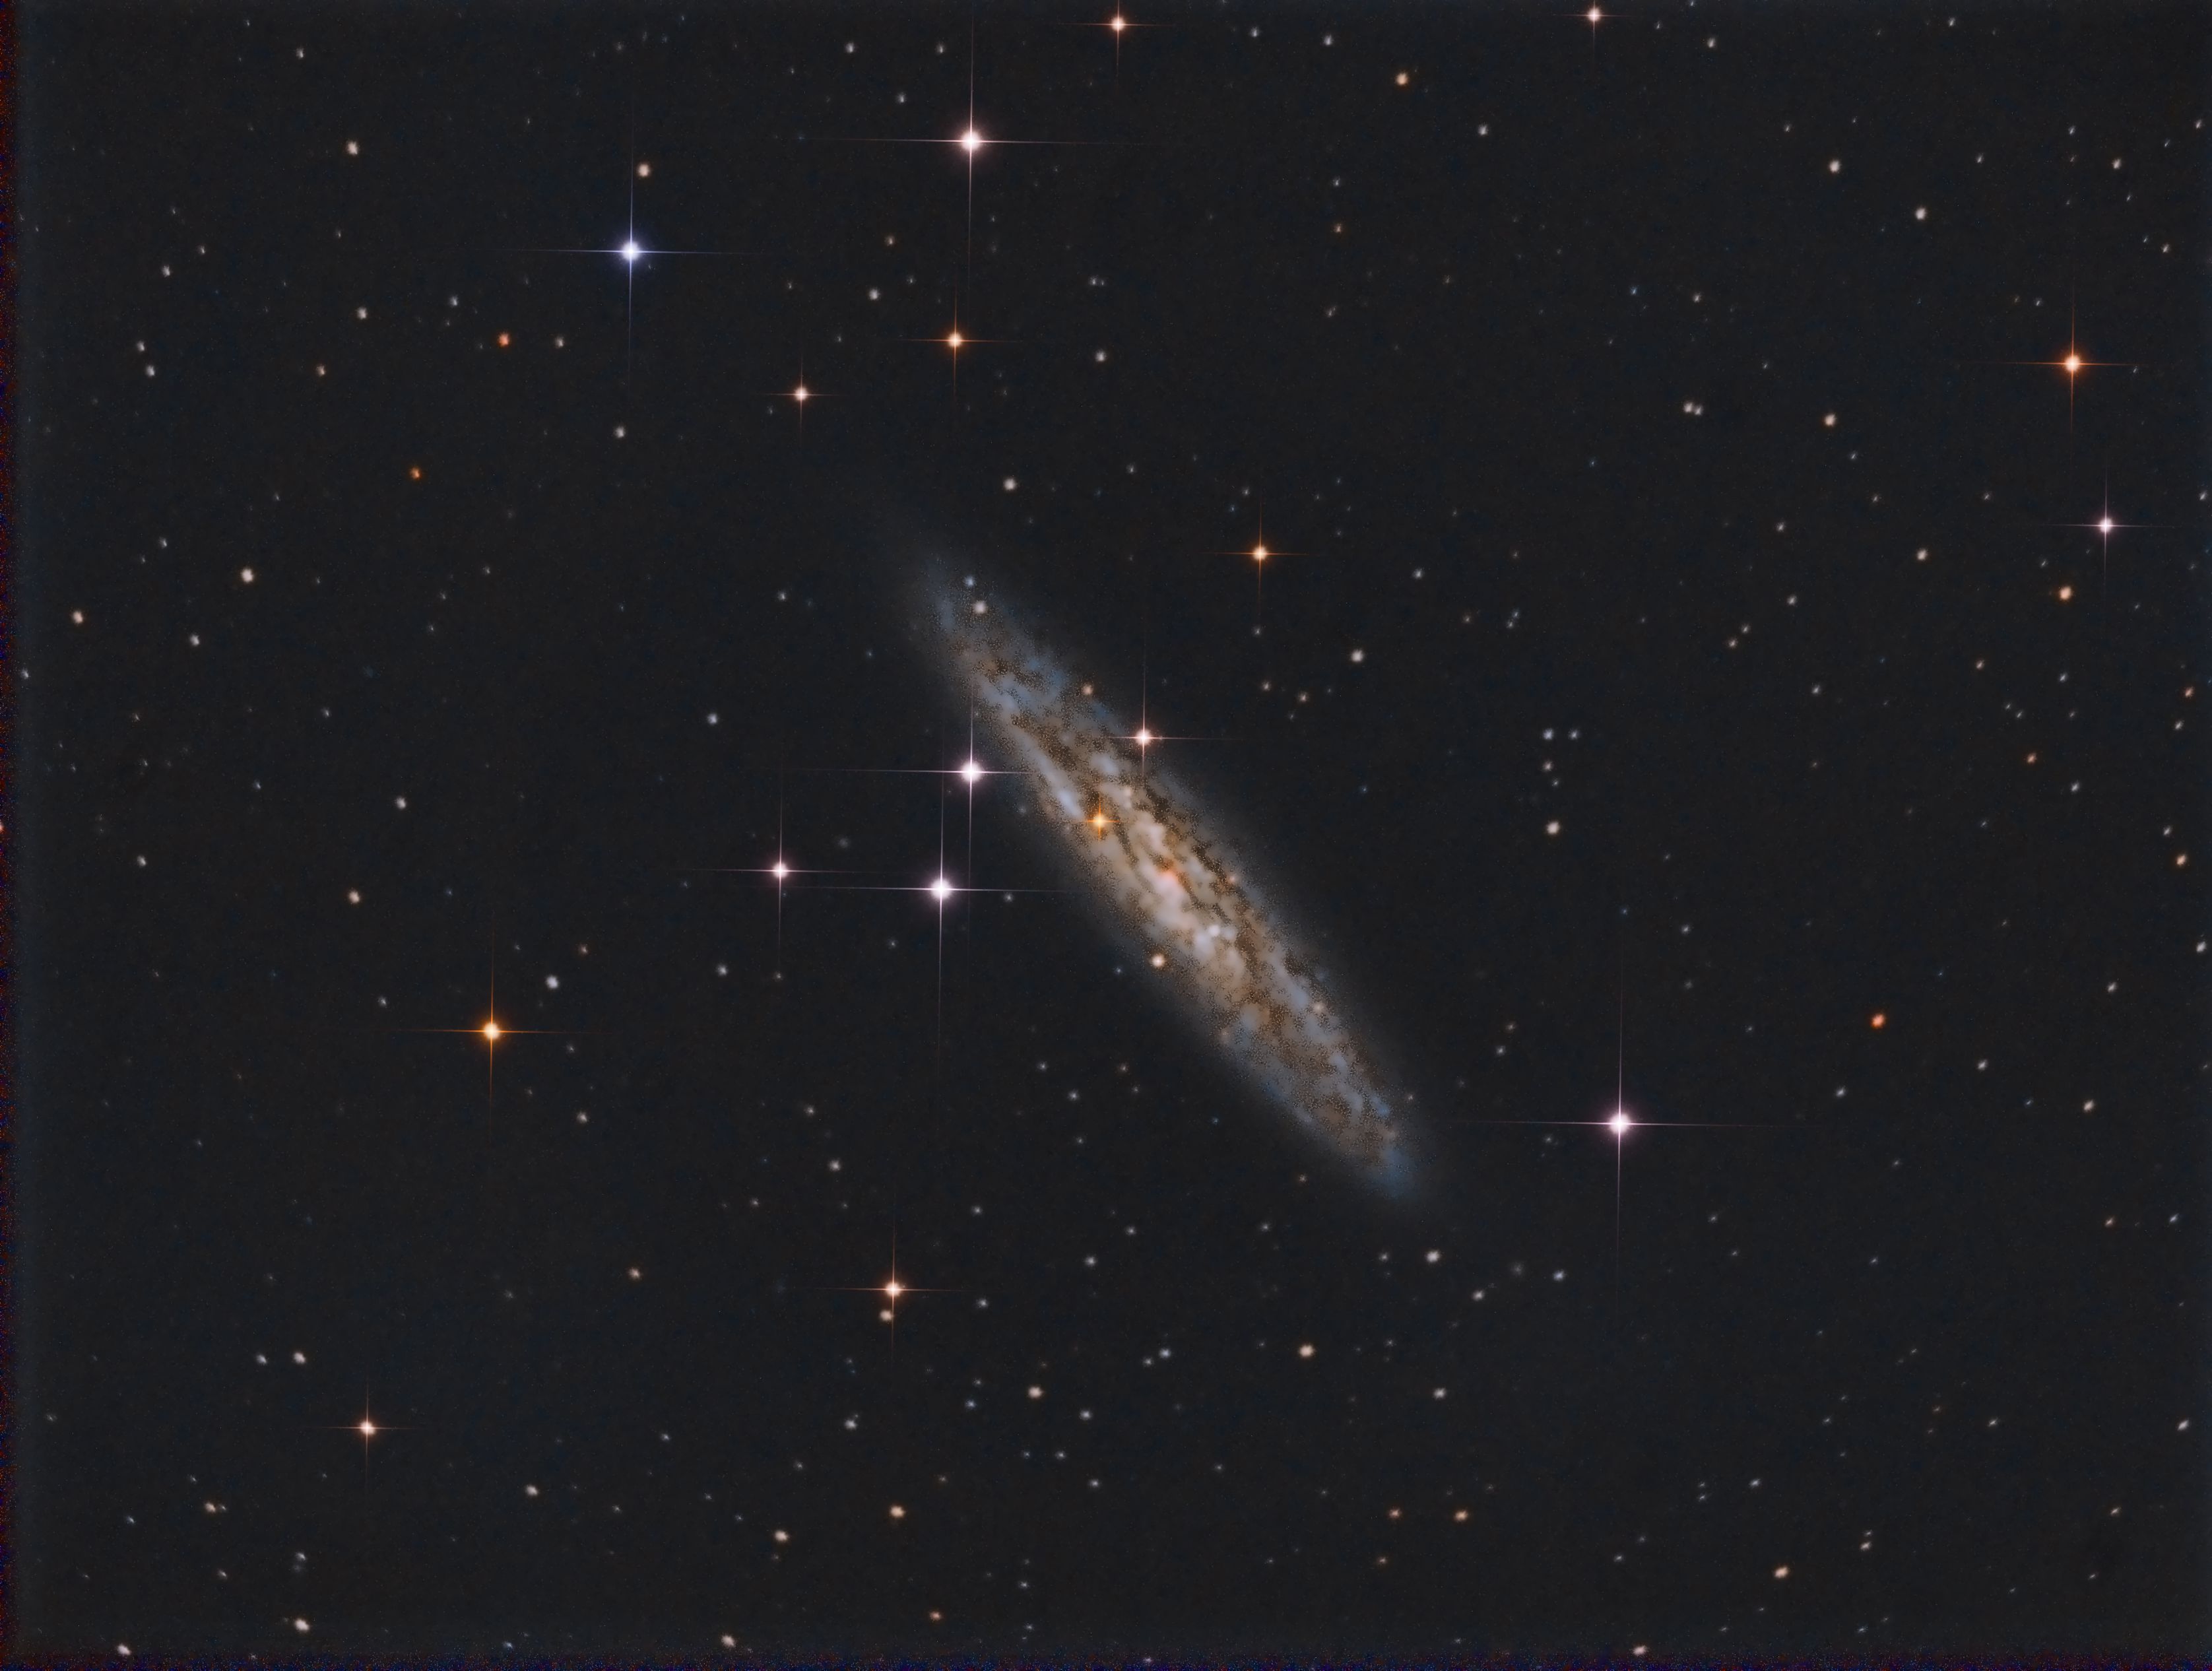 5776b674aeddb_galaxiescultor.jpg.8c0f0b7